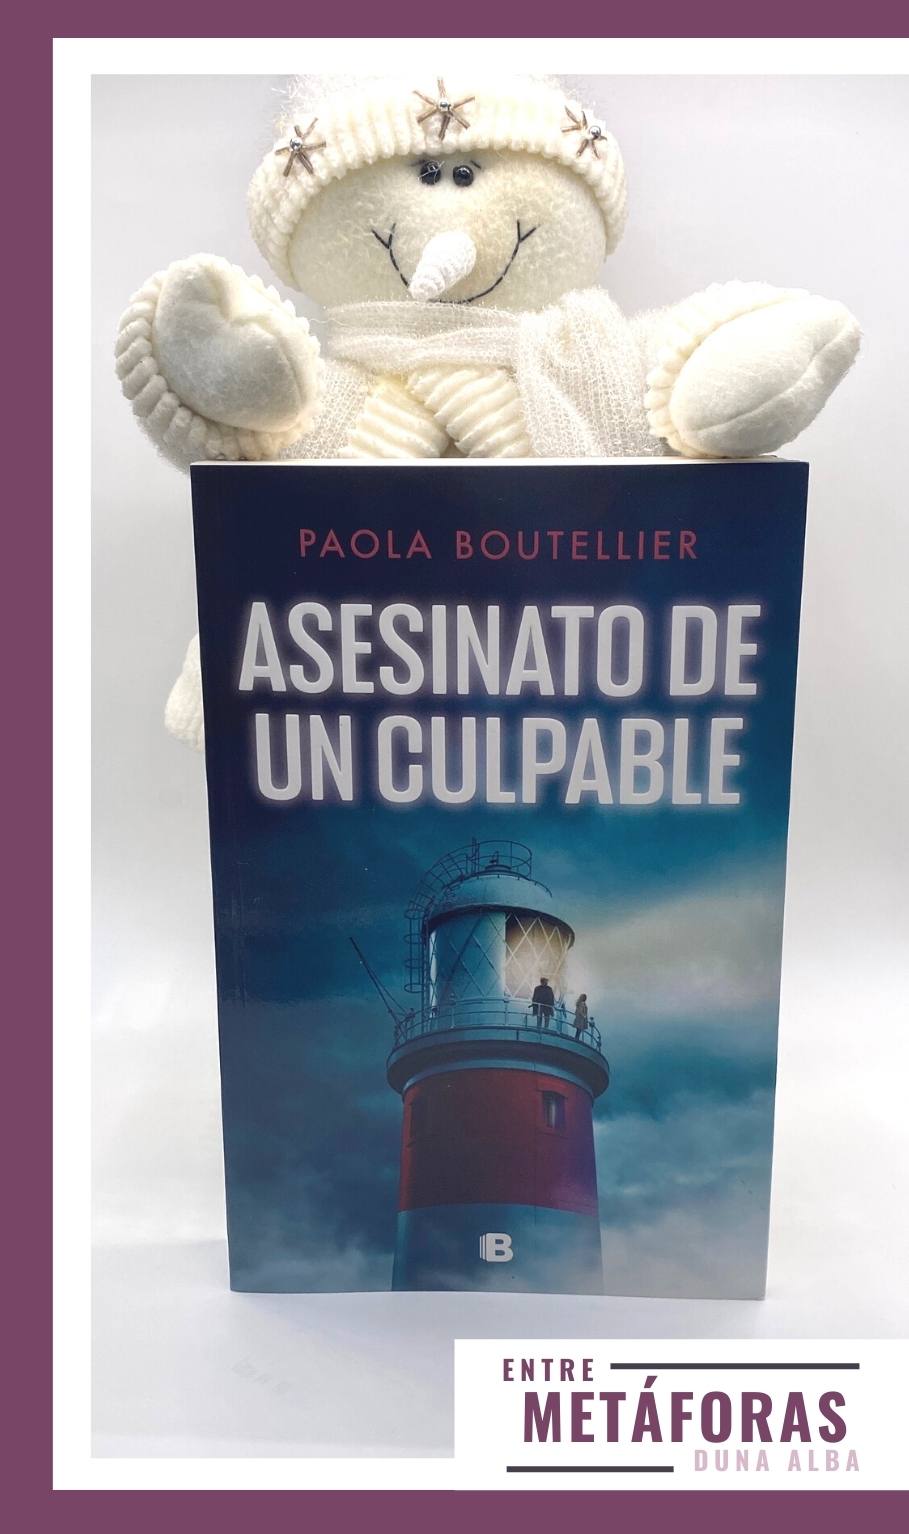 Asesinato de un culpable, de Paola Boutellier